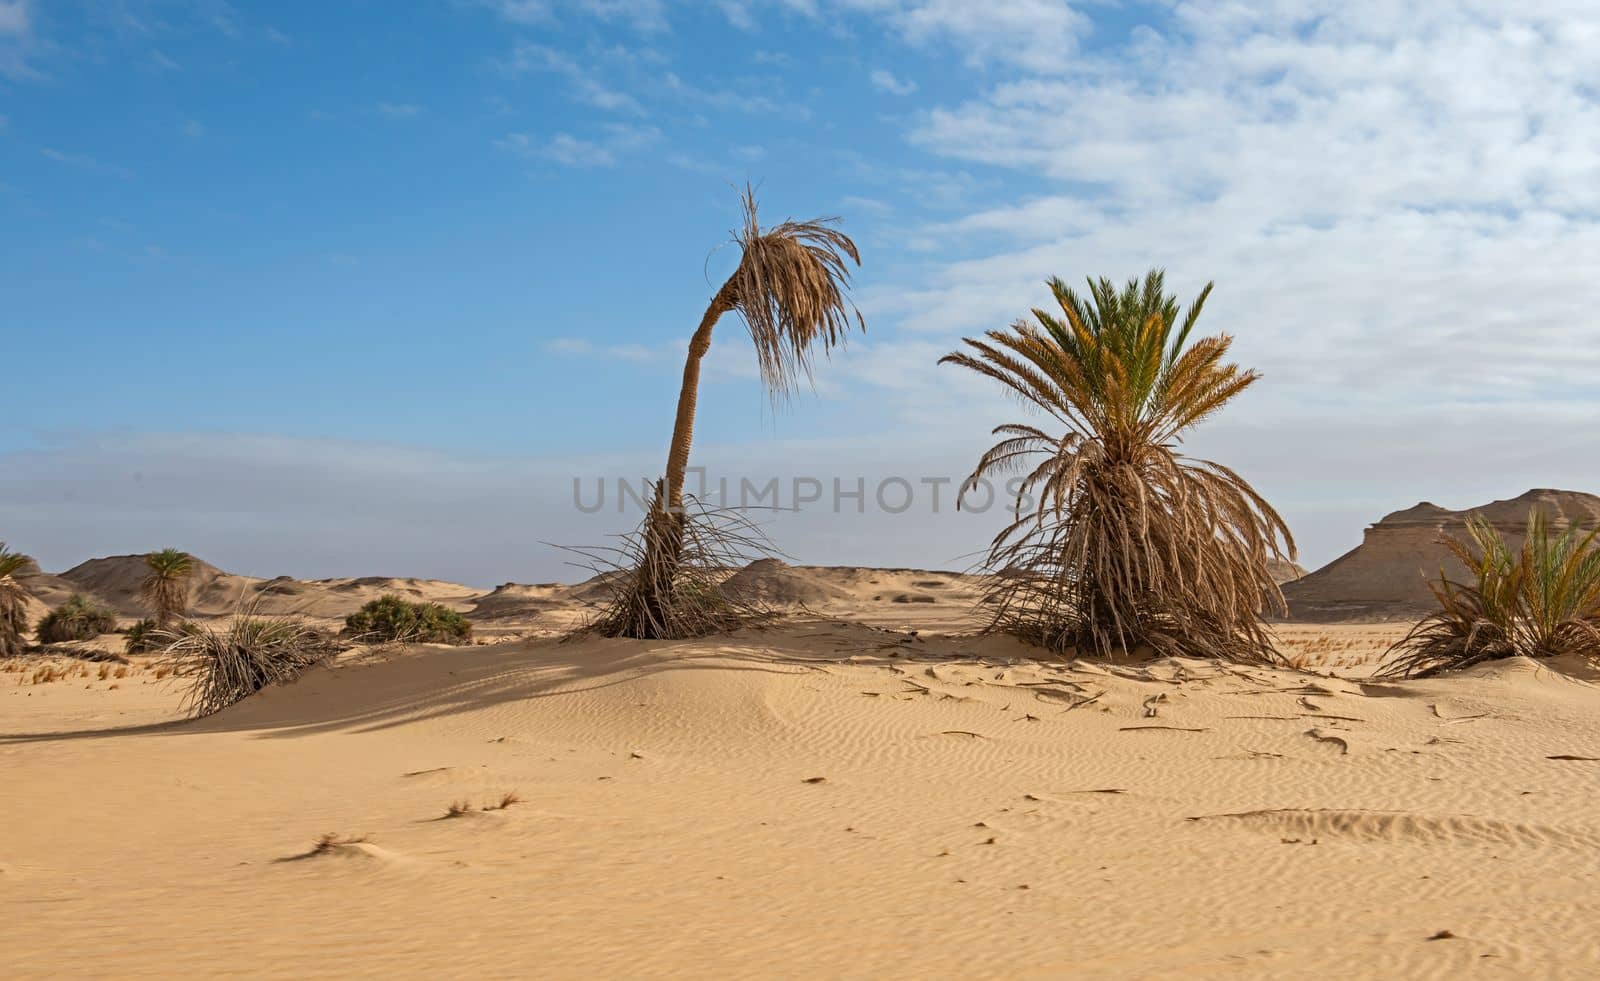 Landscape scenic view of desolate barren western desert in Egypt Farafra oasis with bushes on sand dunes